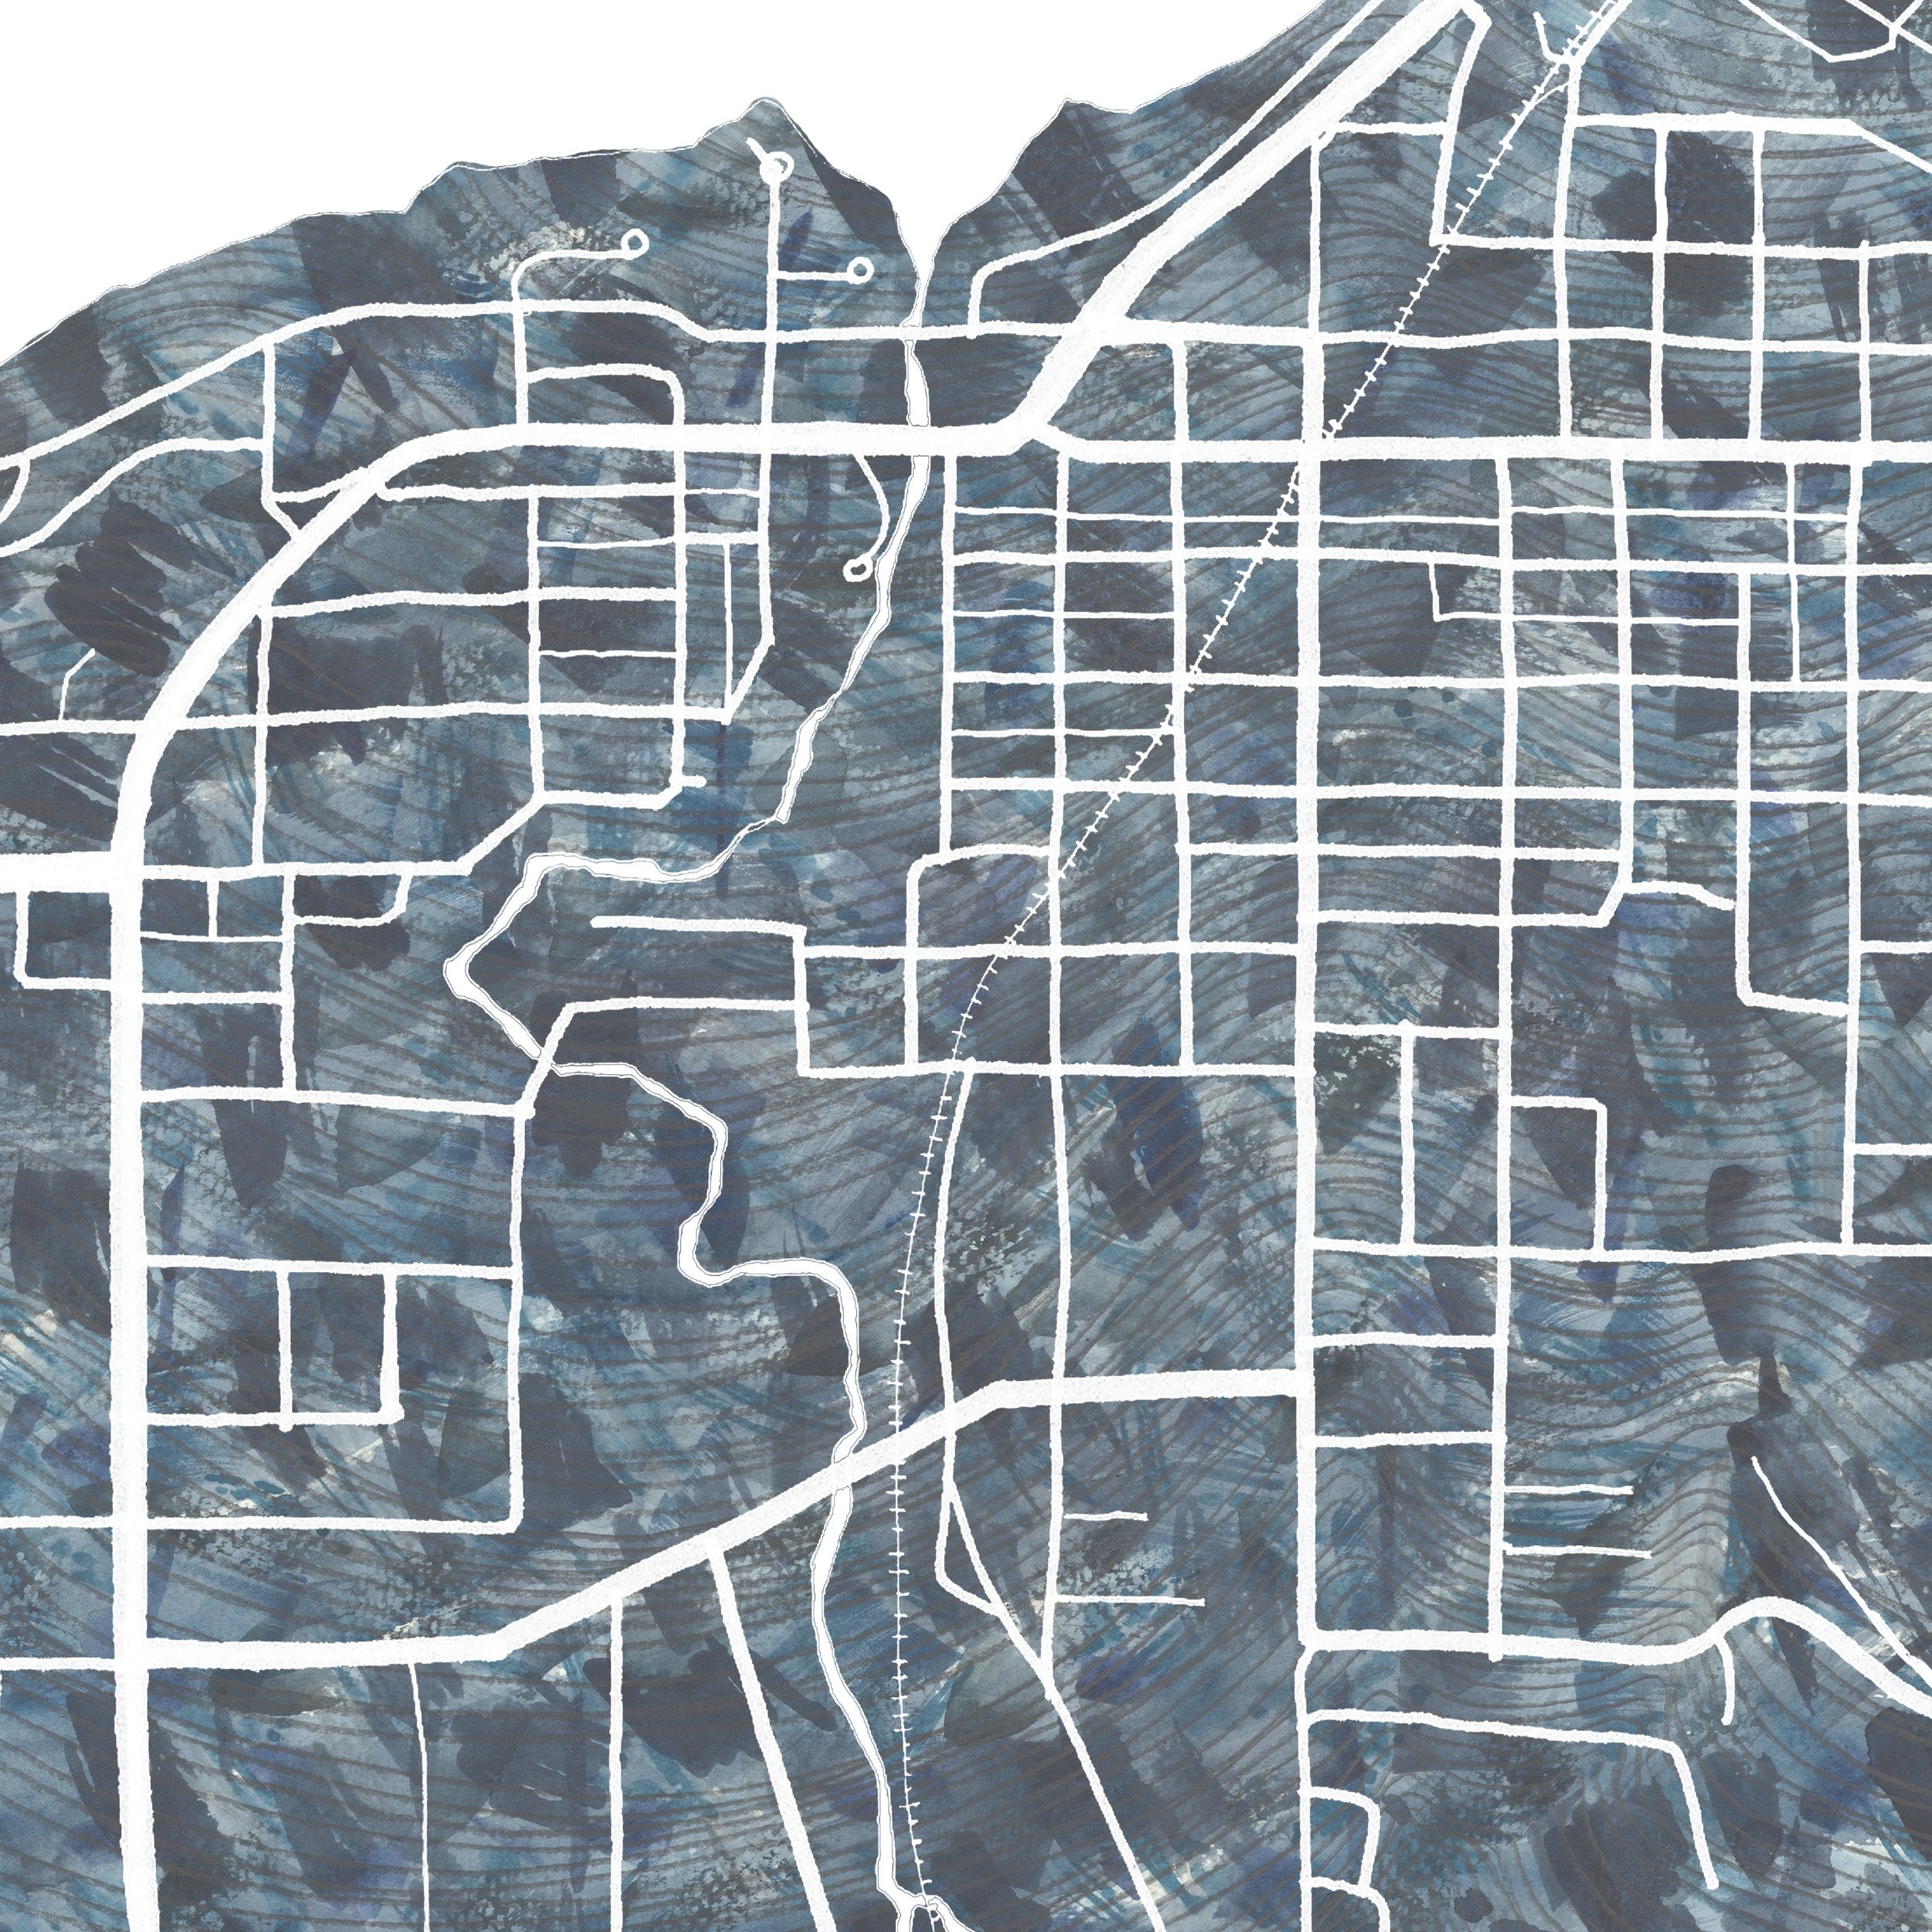 PETOSKEY Urban Fabrics City Map: PRINT